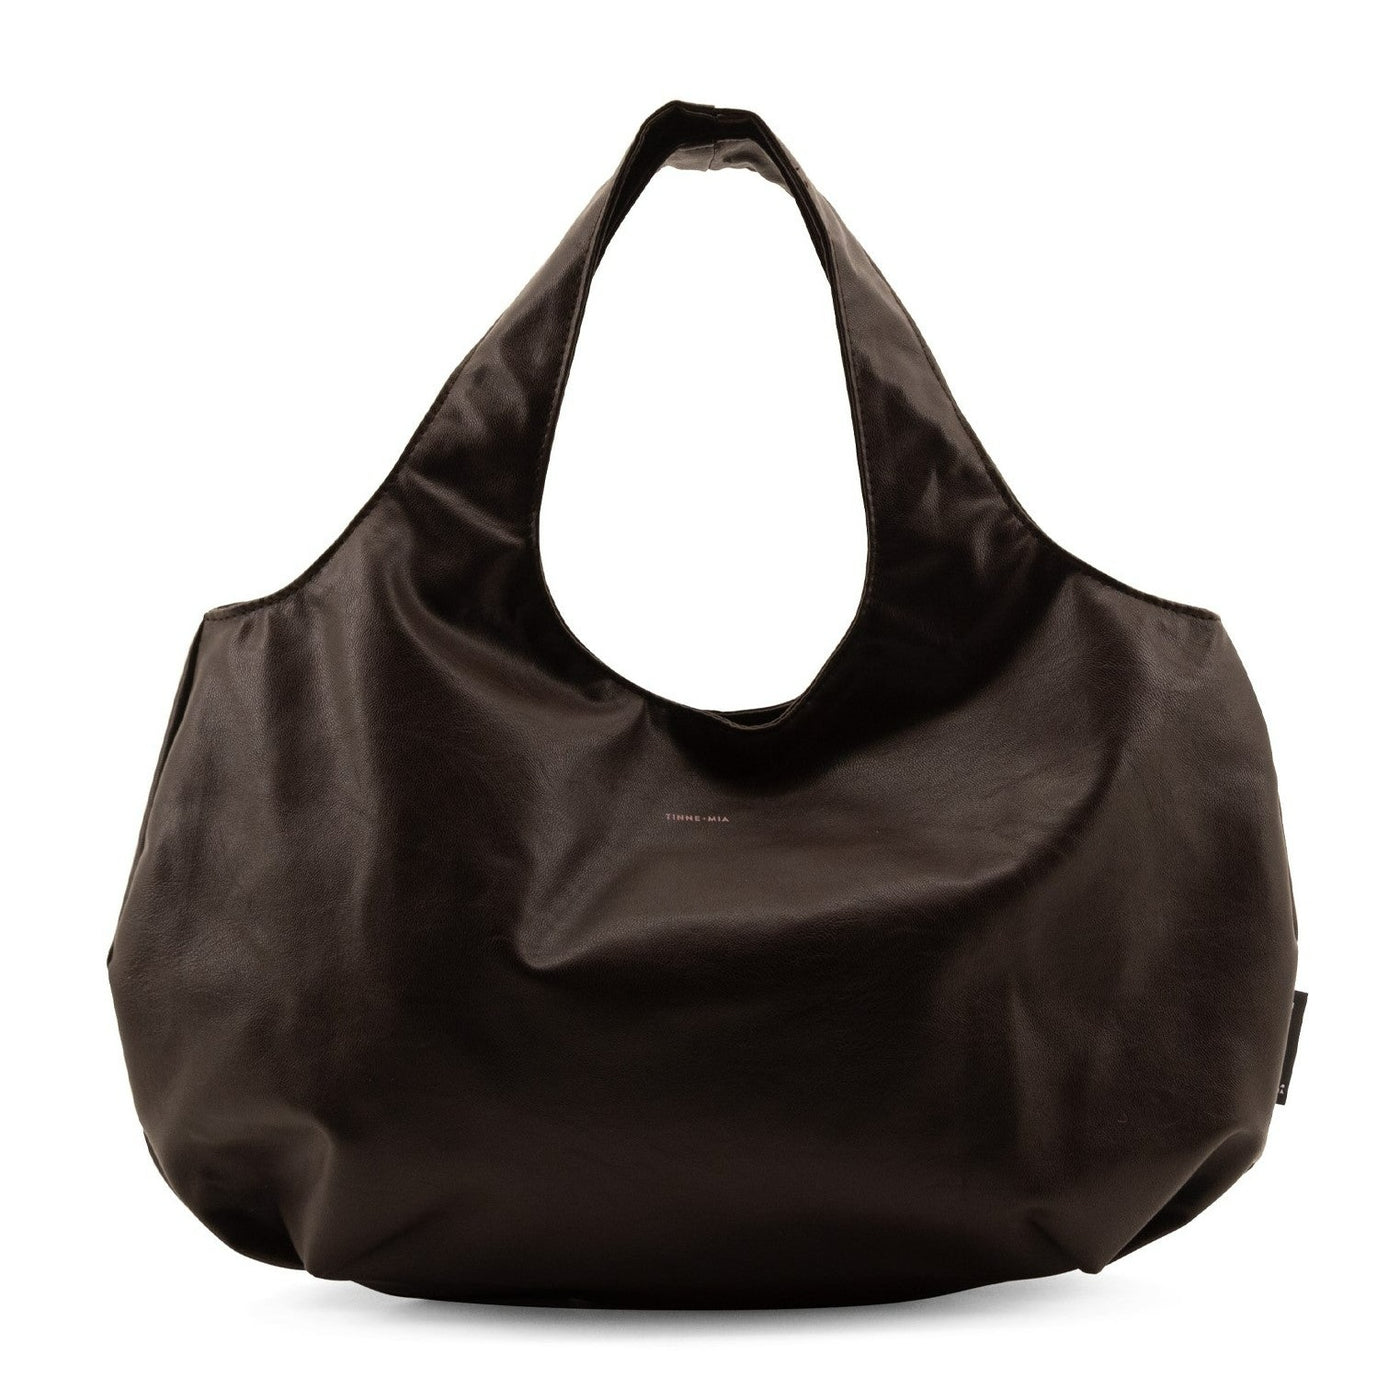 Hand bag in Dark Brown